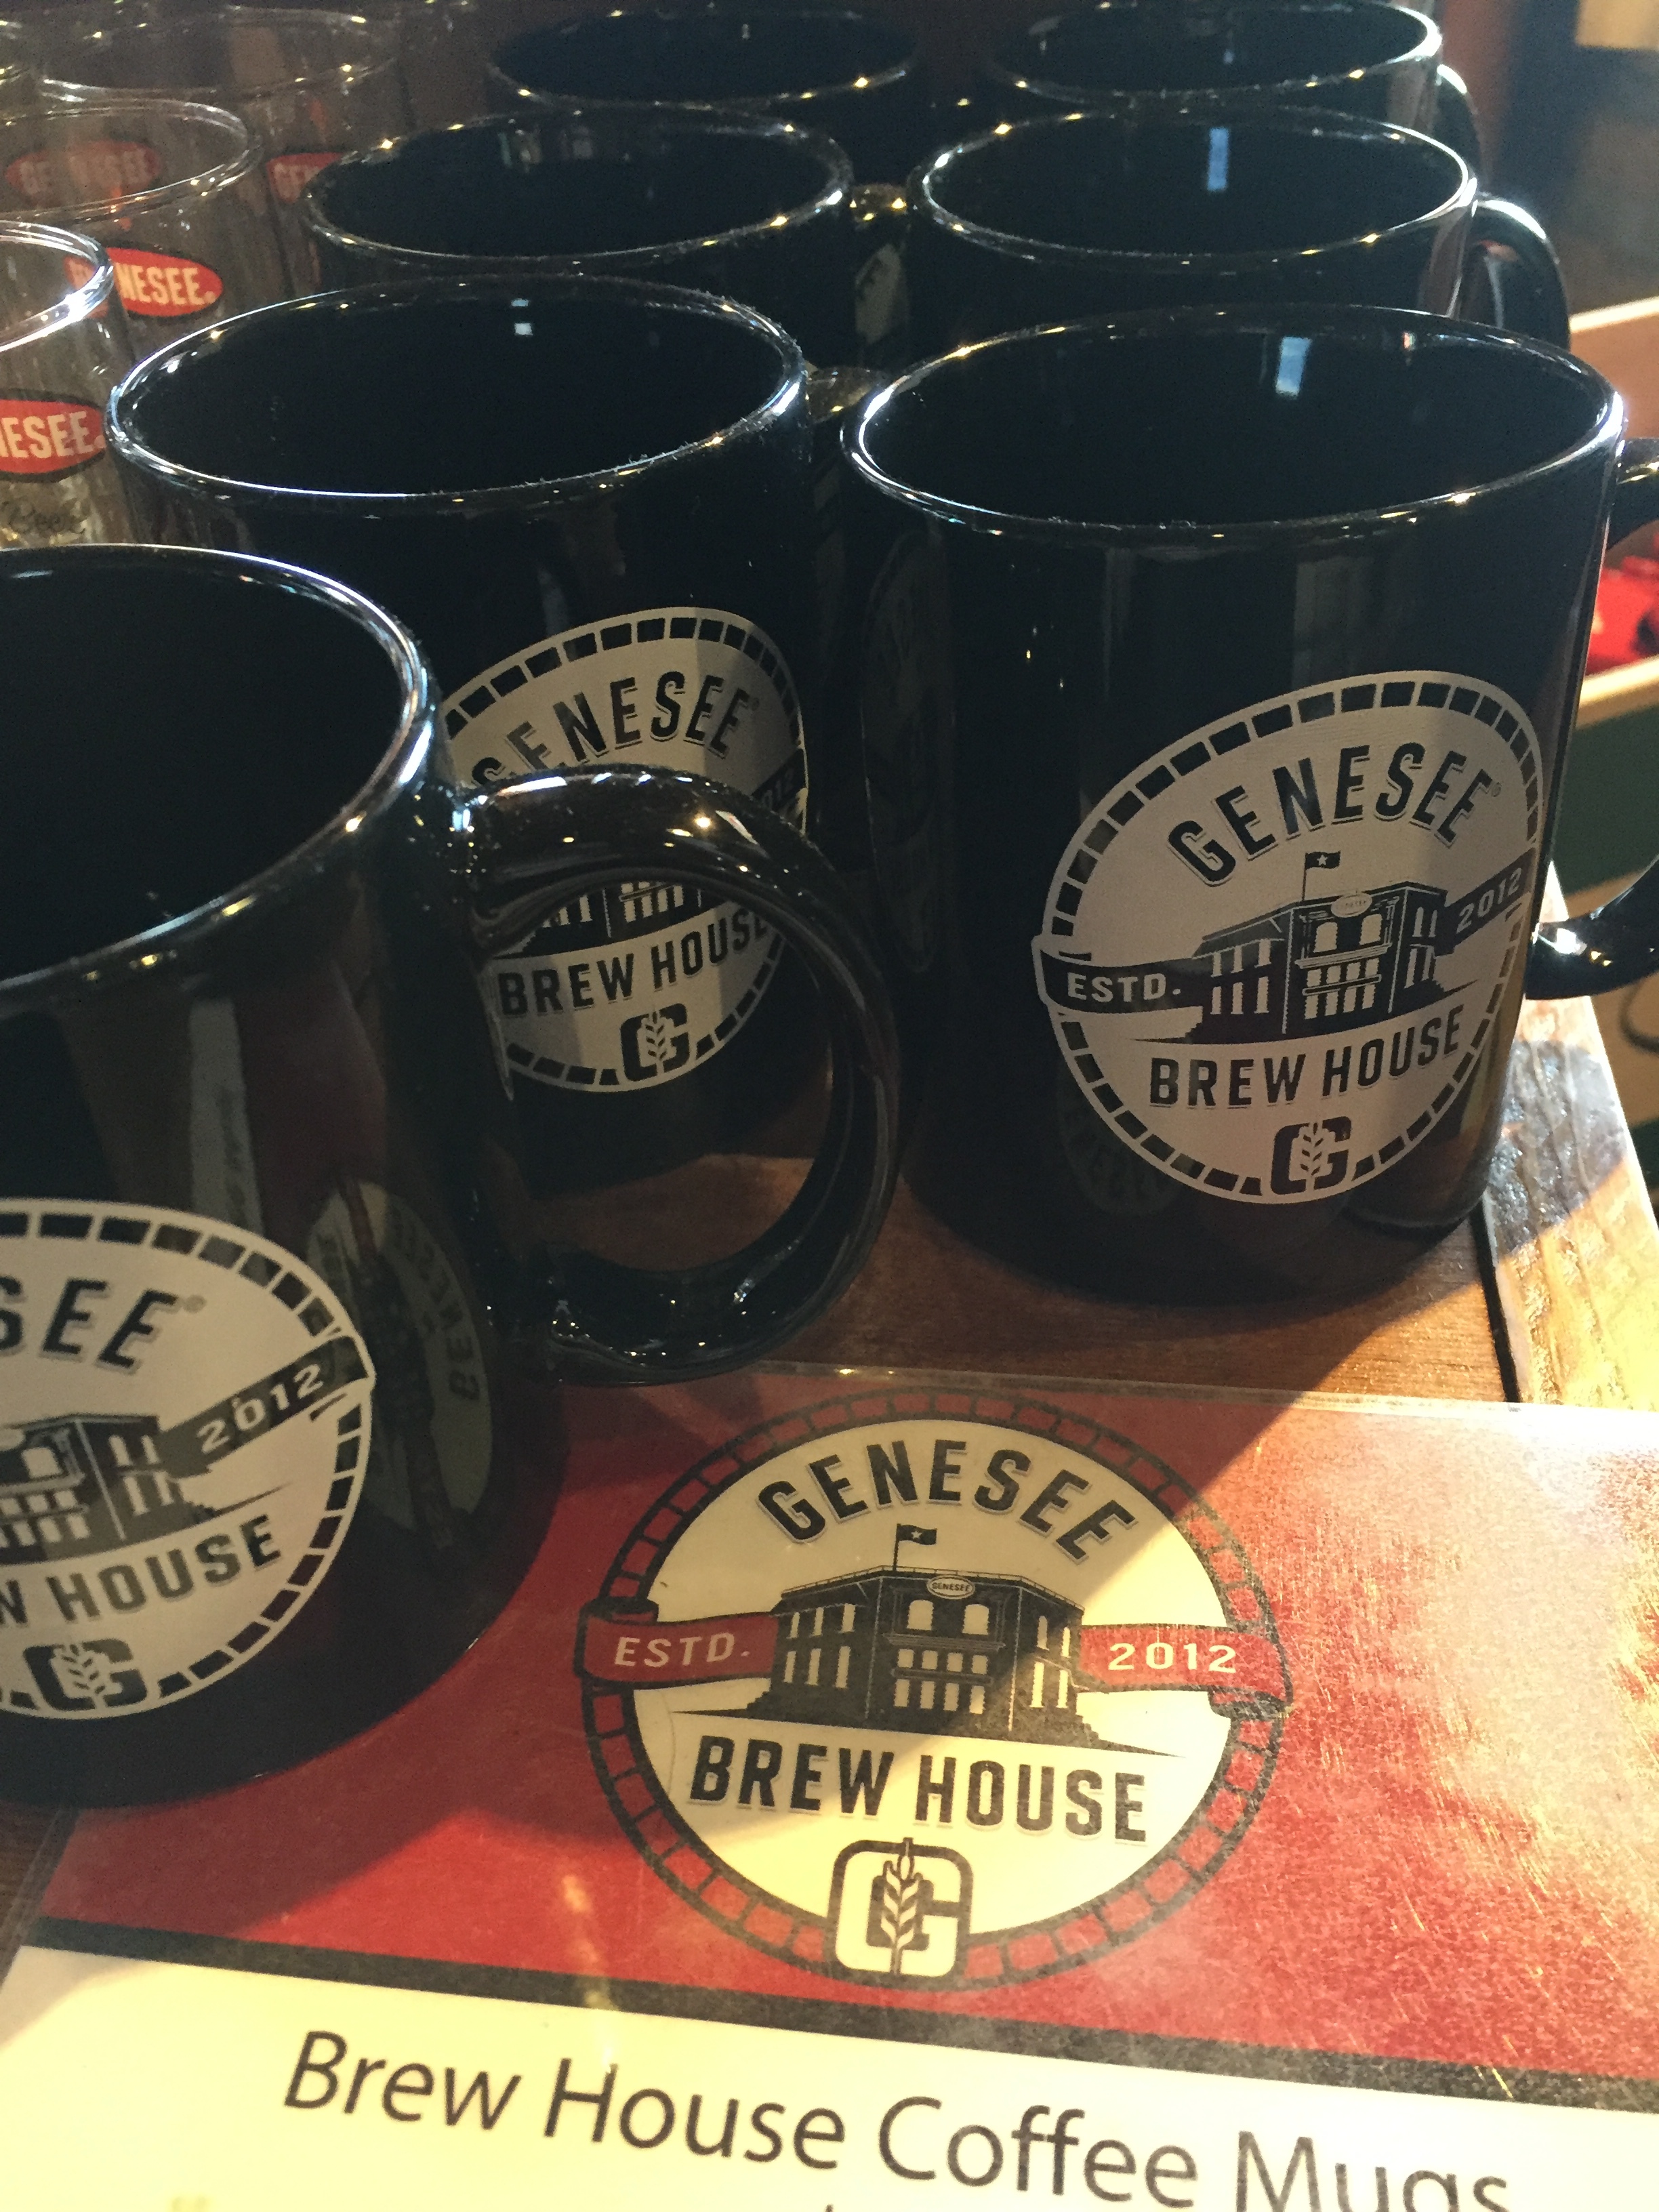 Genesee Brew House Coffee Mugs